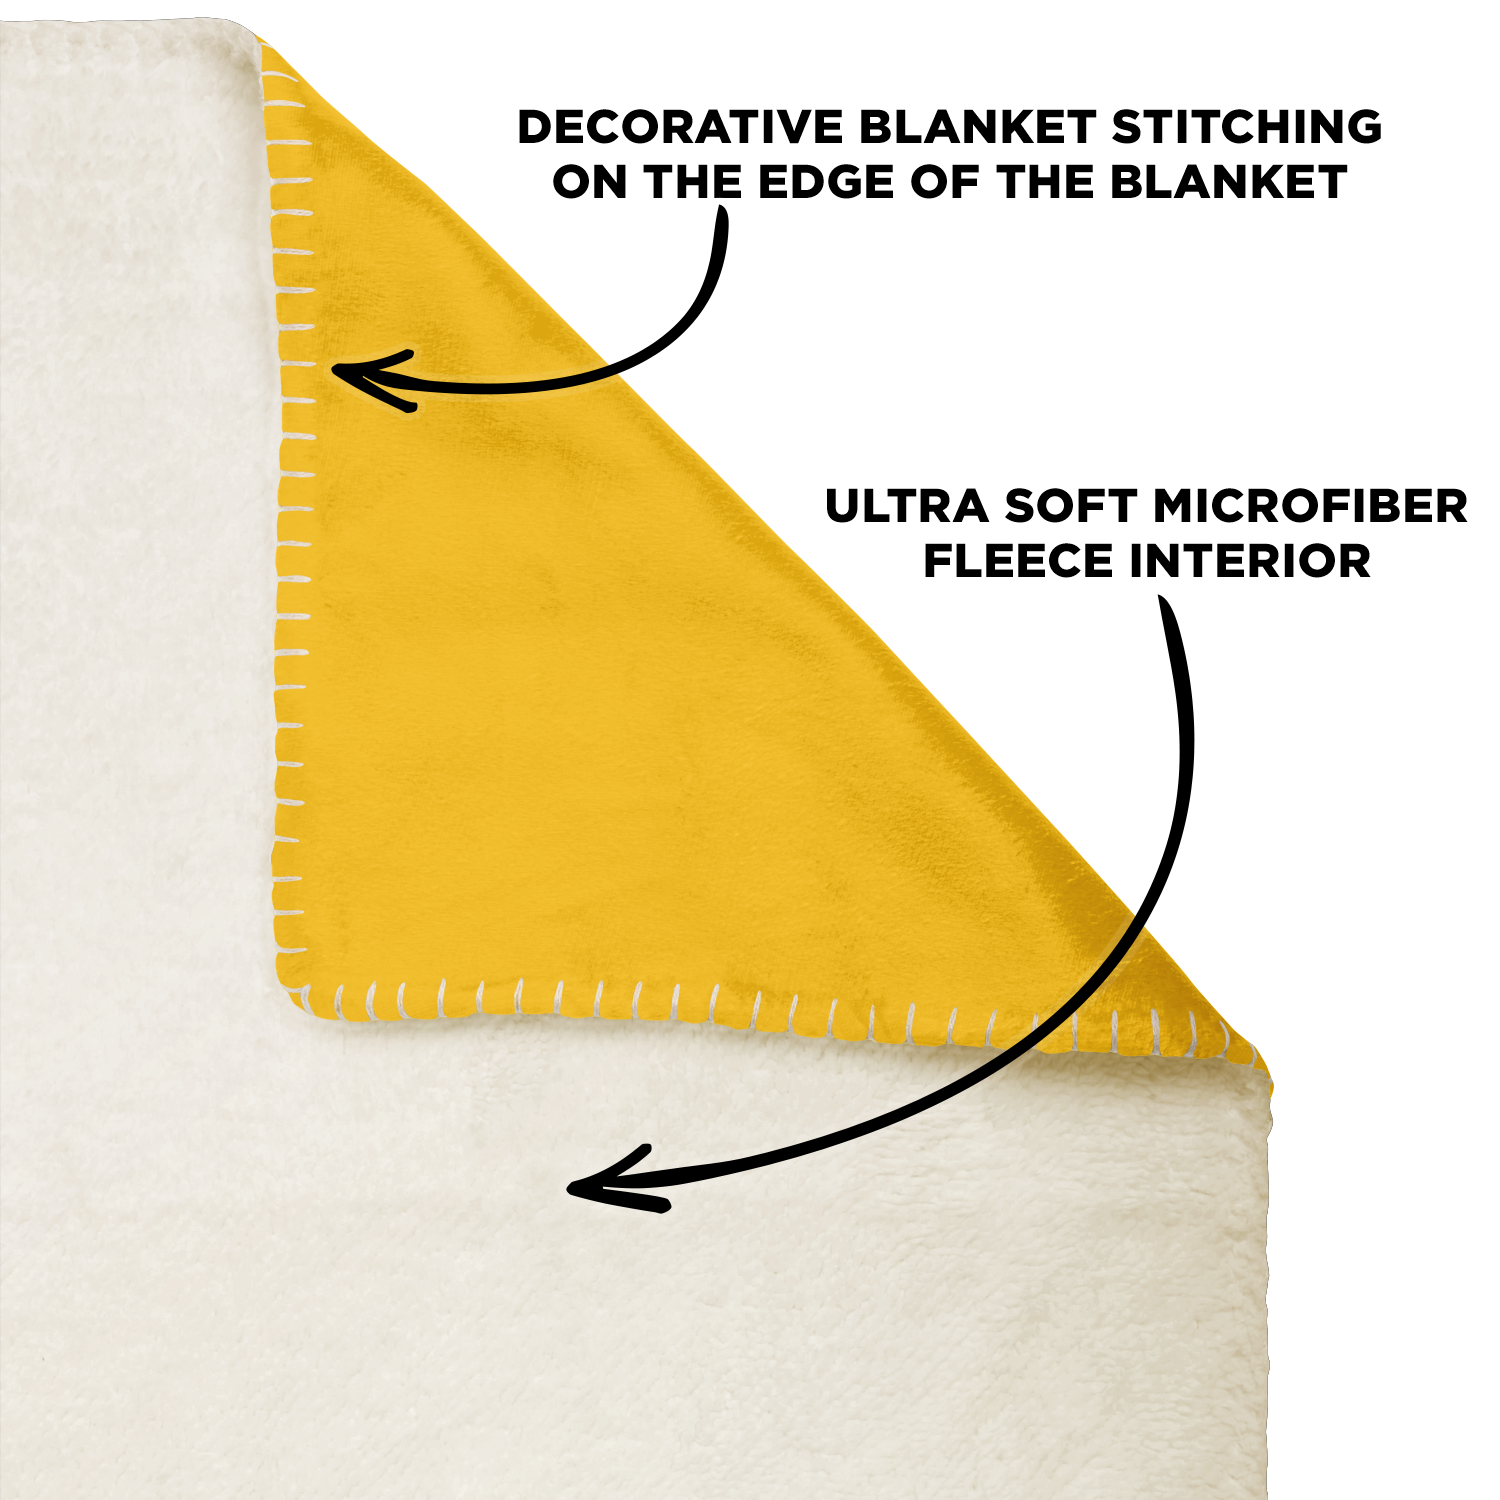 NC A&T Microfleece Blanket